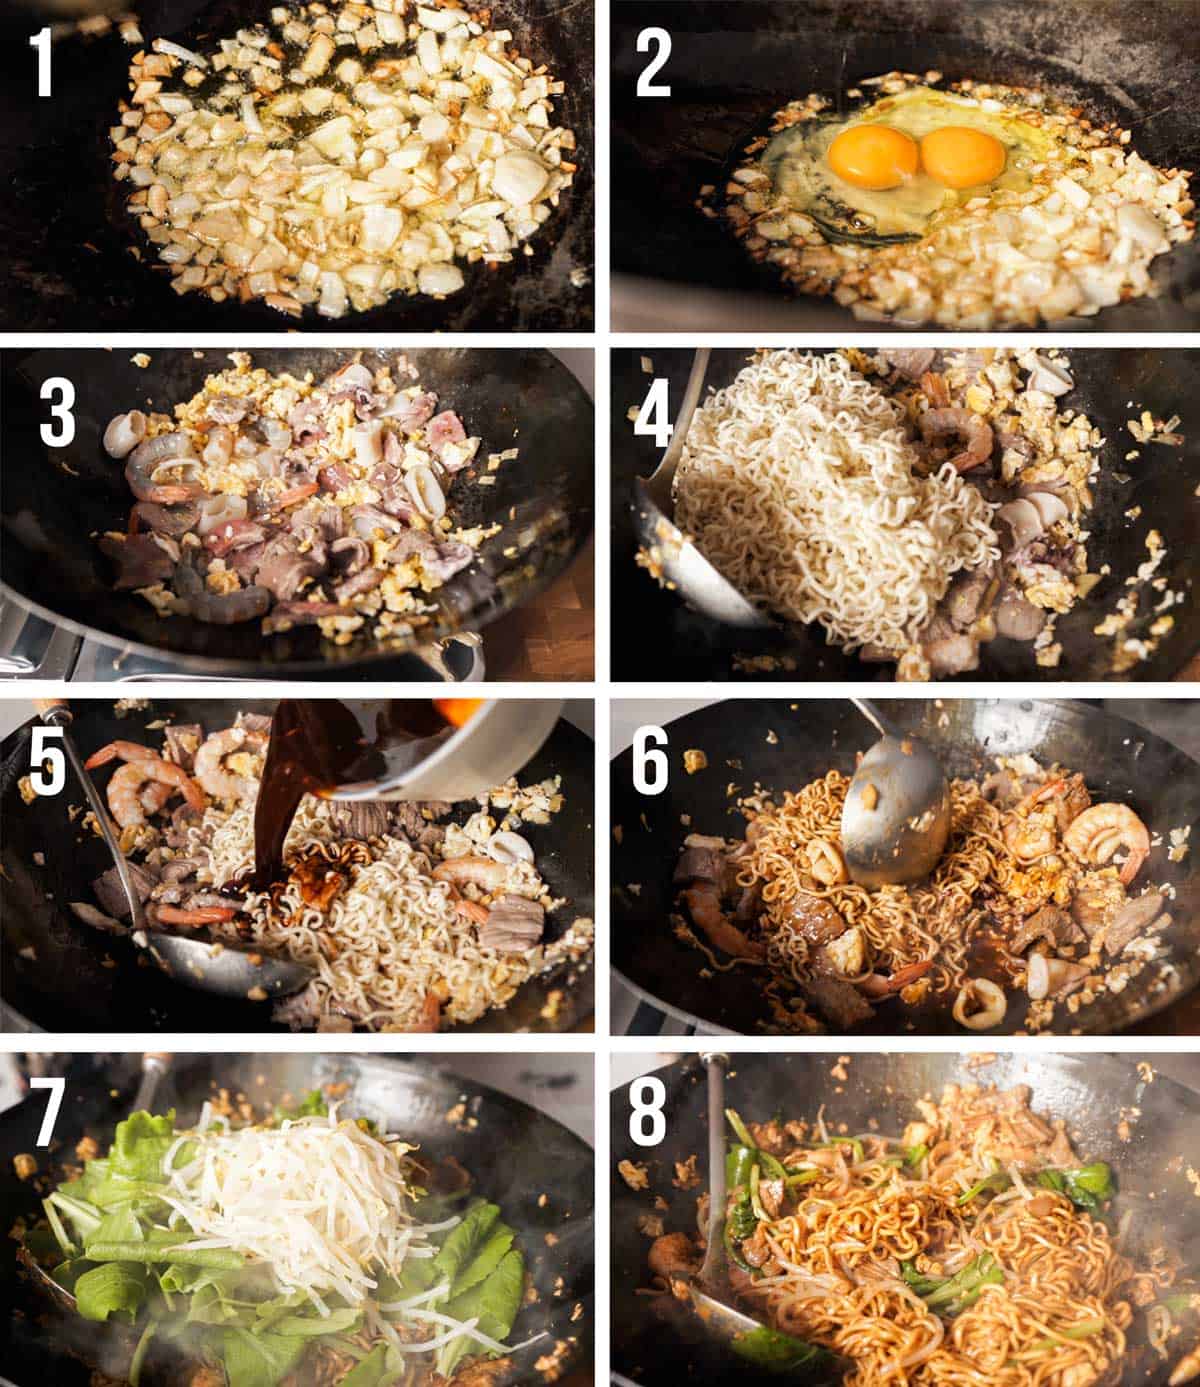 Process of making Malaysian mee goreng